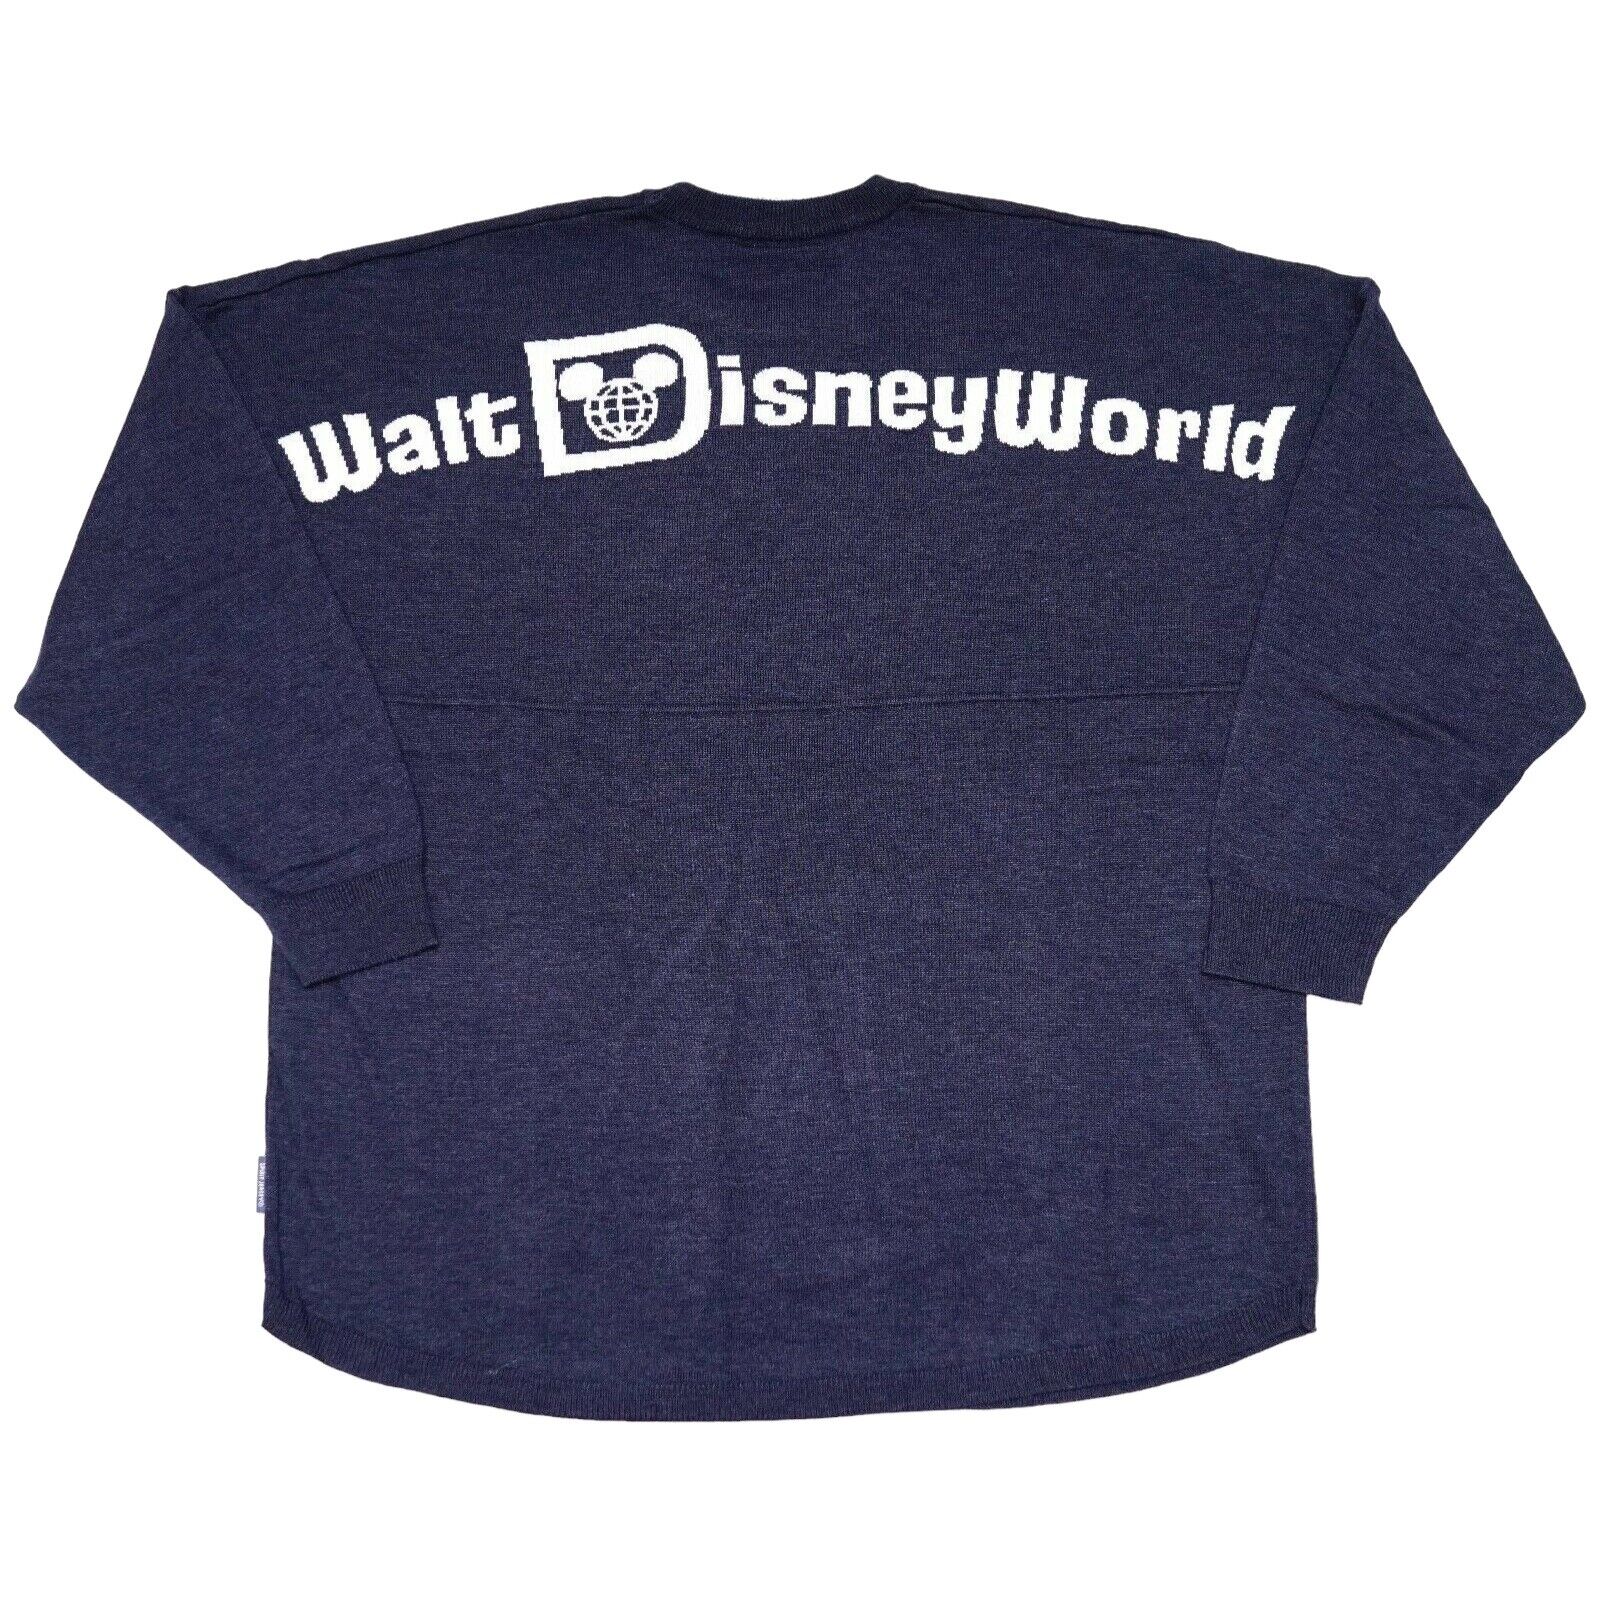 2019 Disney Parks Walt Disney World Knitted Sweater Spirit Jersey M